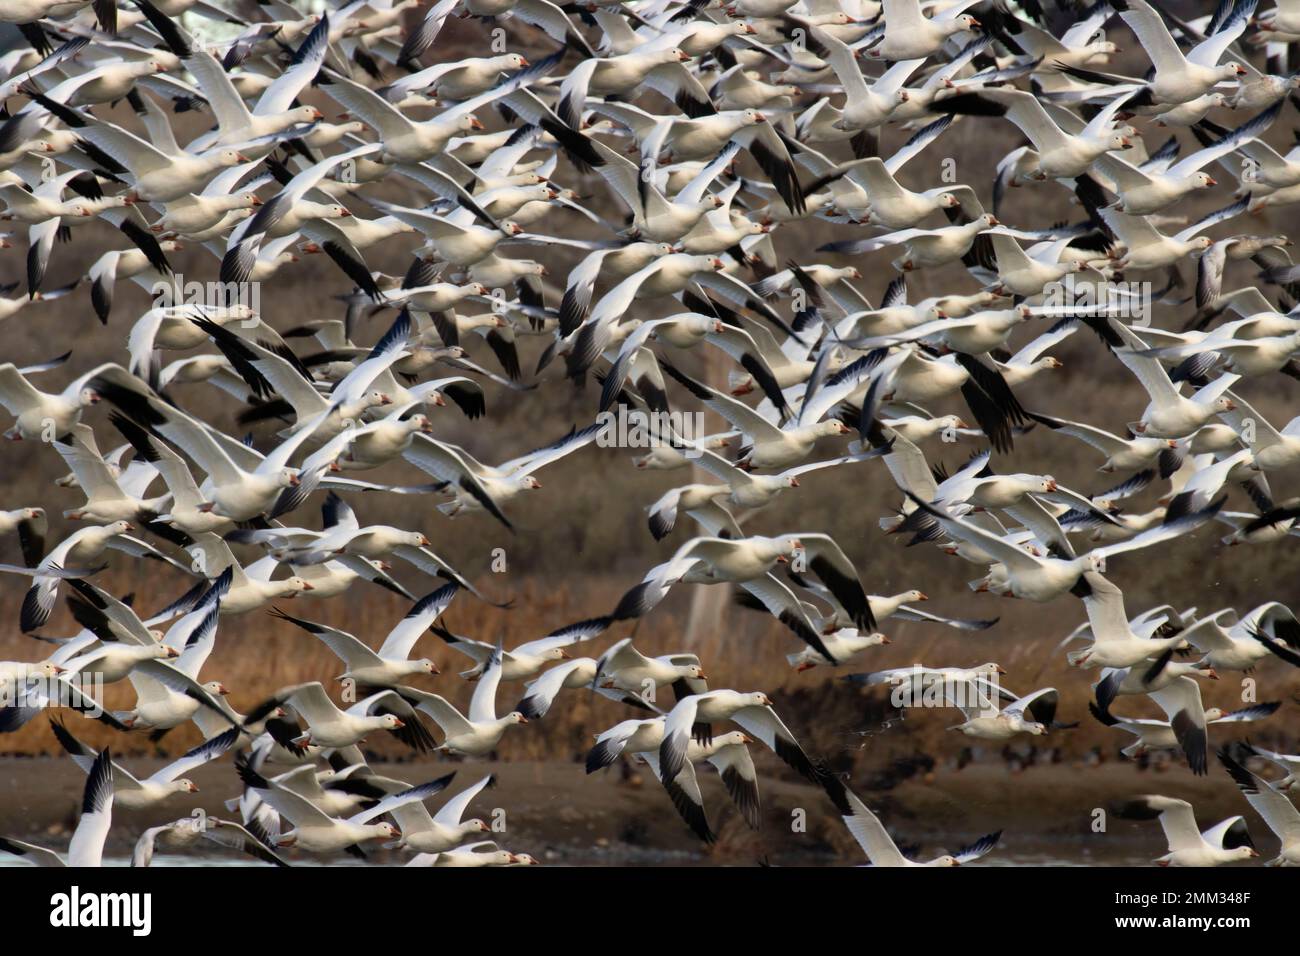 Snow geese (Anser caerulescens) in flight, McNary National Wildlife Refuge, Washington Stock Photo